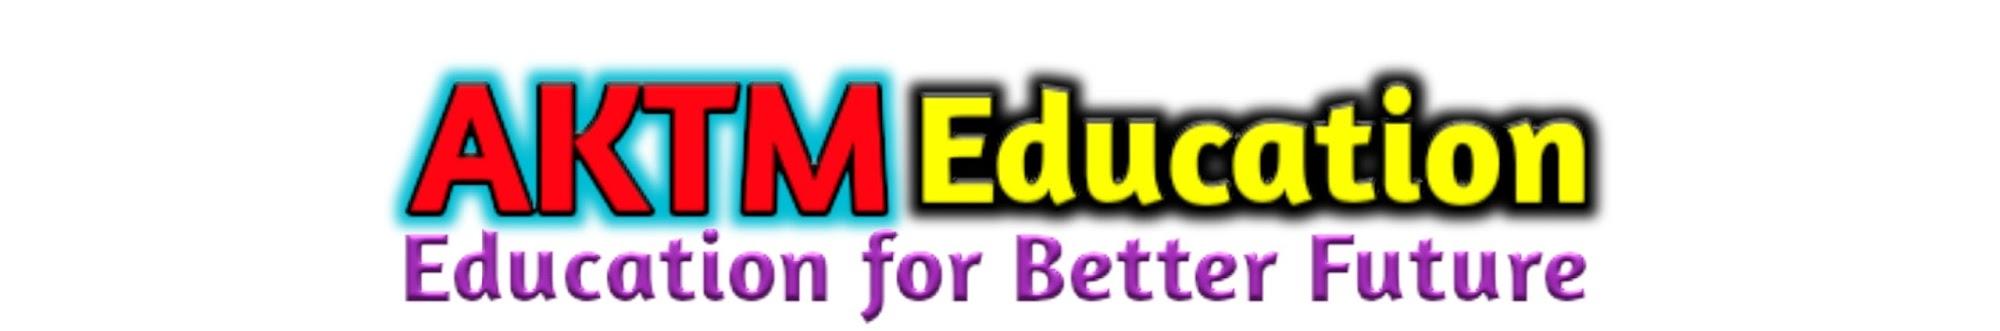 AKTM Education